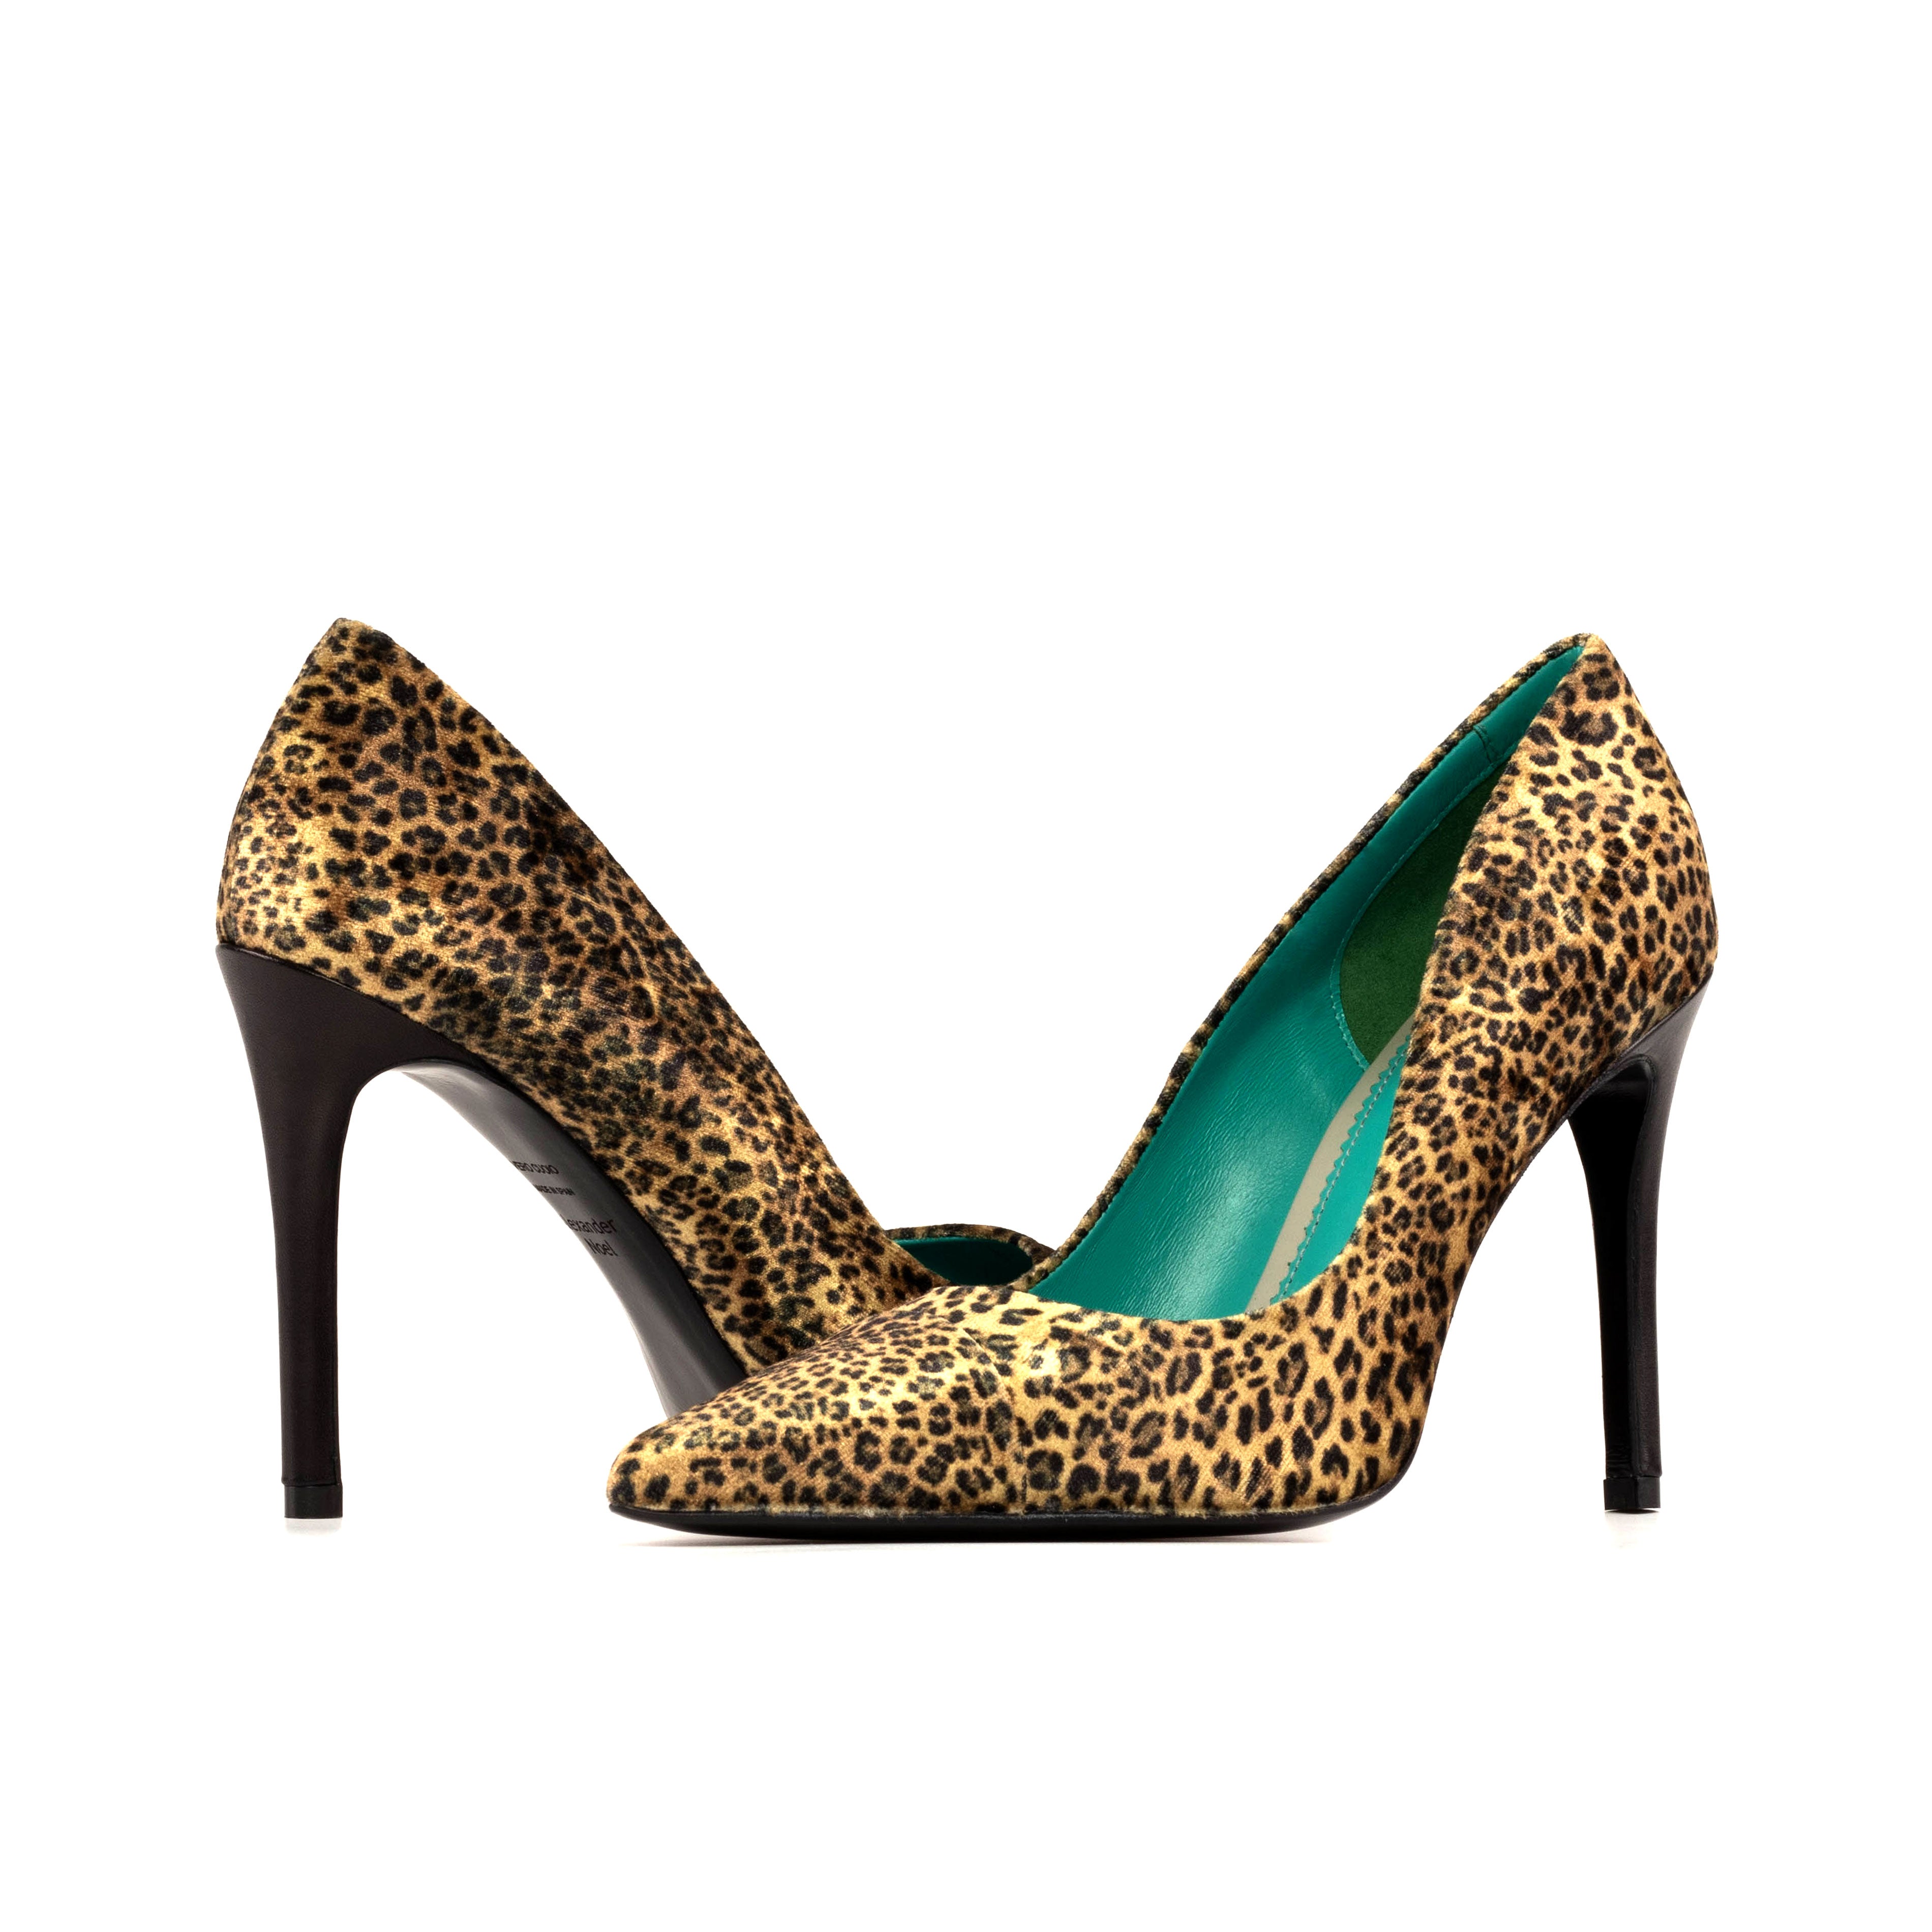 Gianni Bini | Shoes | Giannibini Leopard Print High Heels | Poshmark